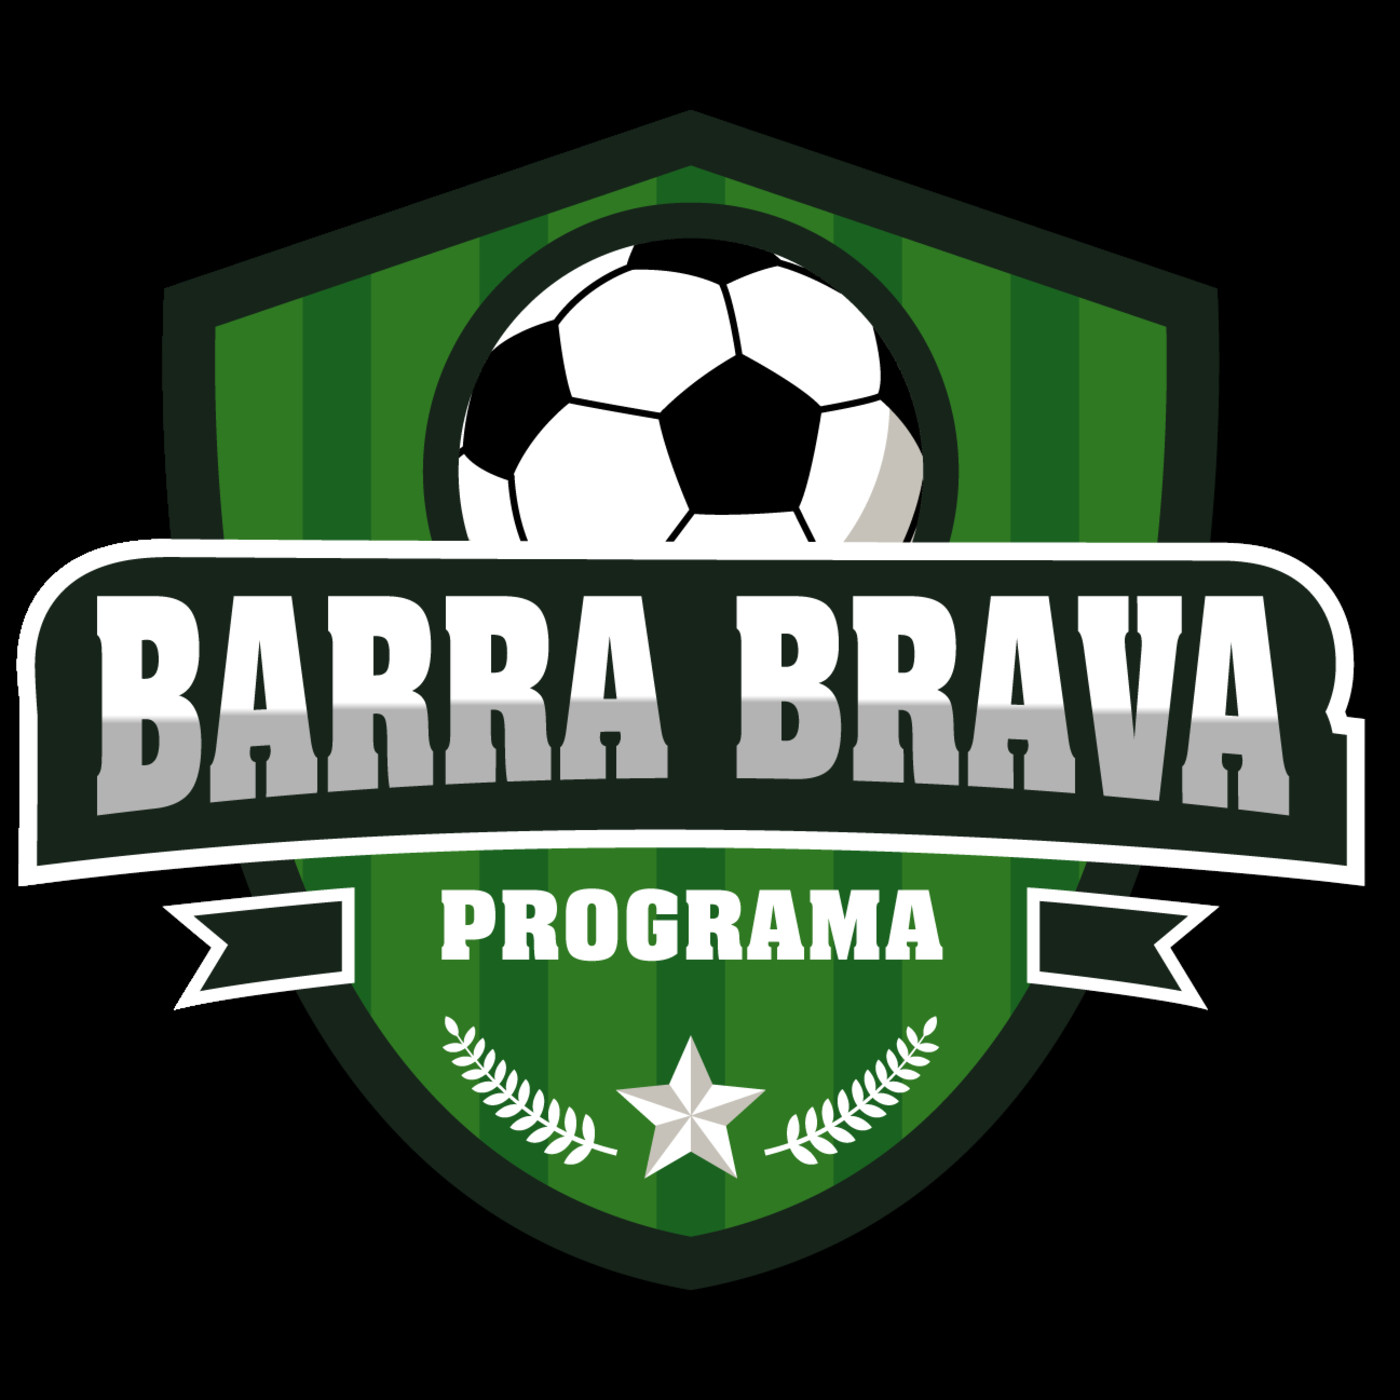 13. Podcast BARRA BRAVA Programa 8 de julio de 2019